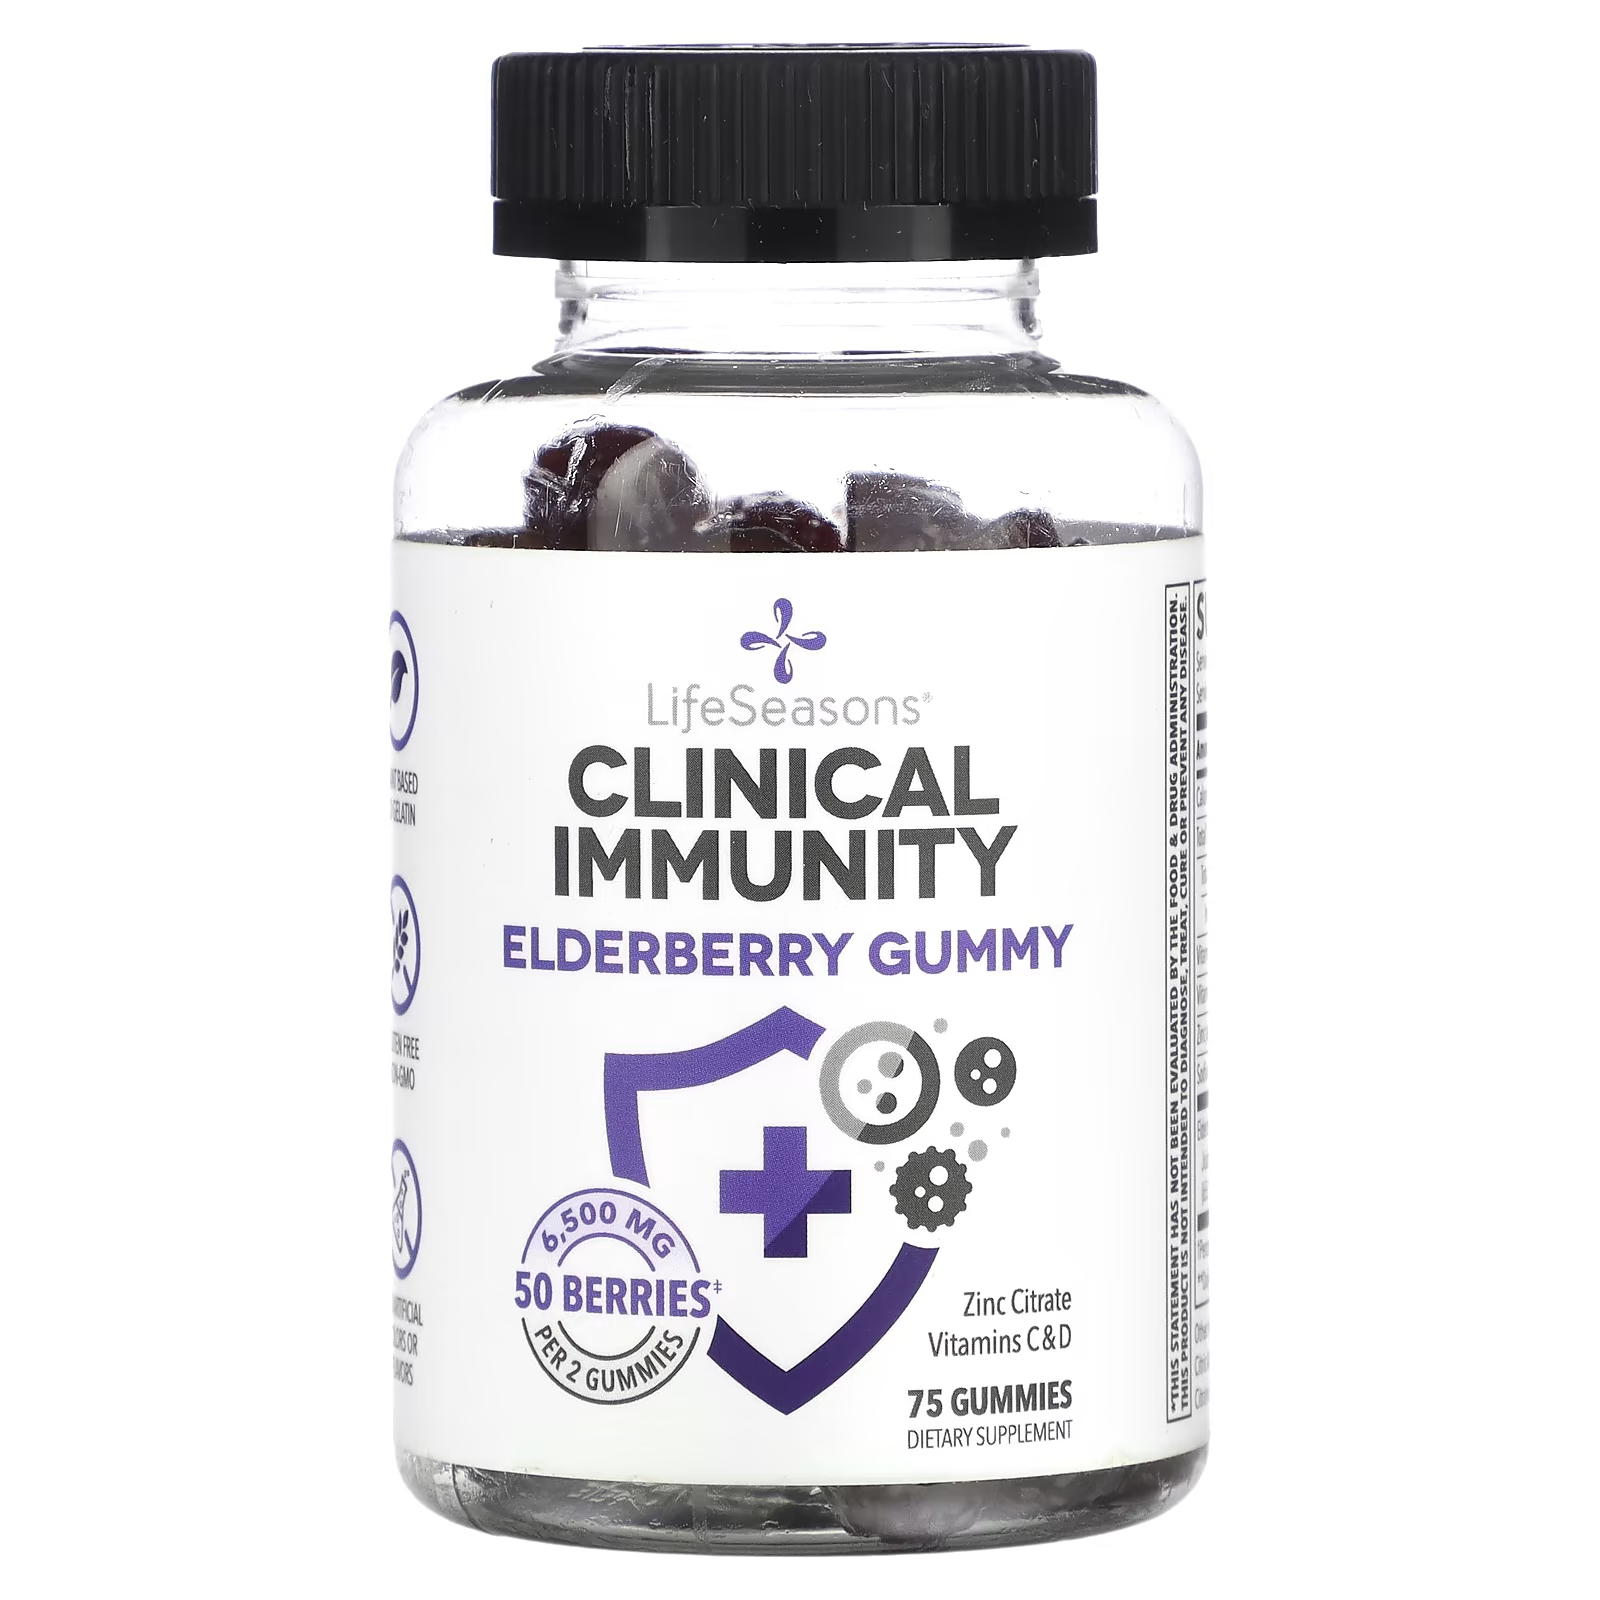 Пищевая добавка LifeSeasons Clinical Immunity Elderberry Gummy 6500 мг, 75 таблеток (3250 мг на таблетку) lifeseasons clinical immunity жевательные таблетки с бузиной 3250 мг 75 жевательных таблеток